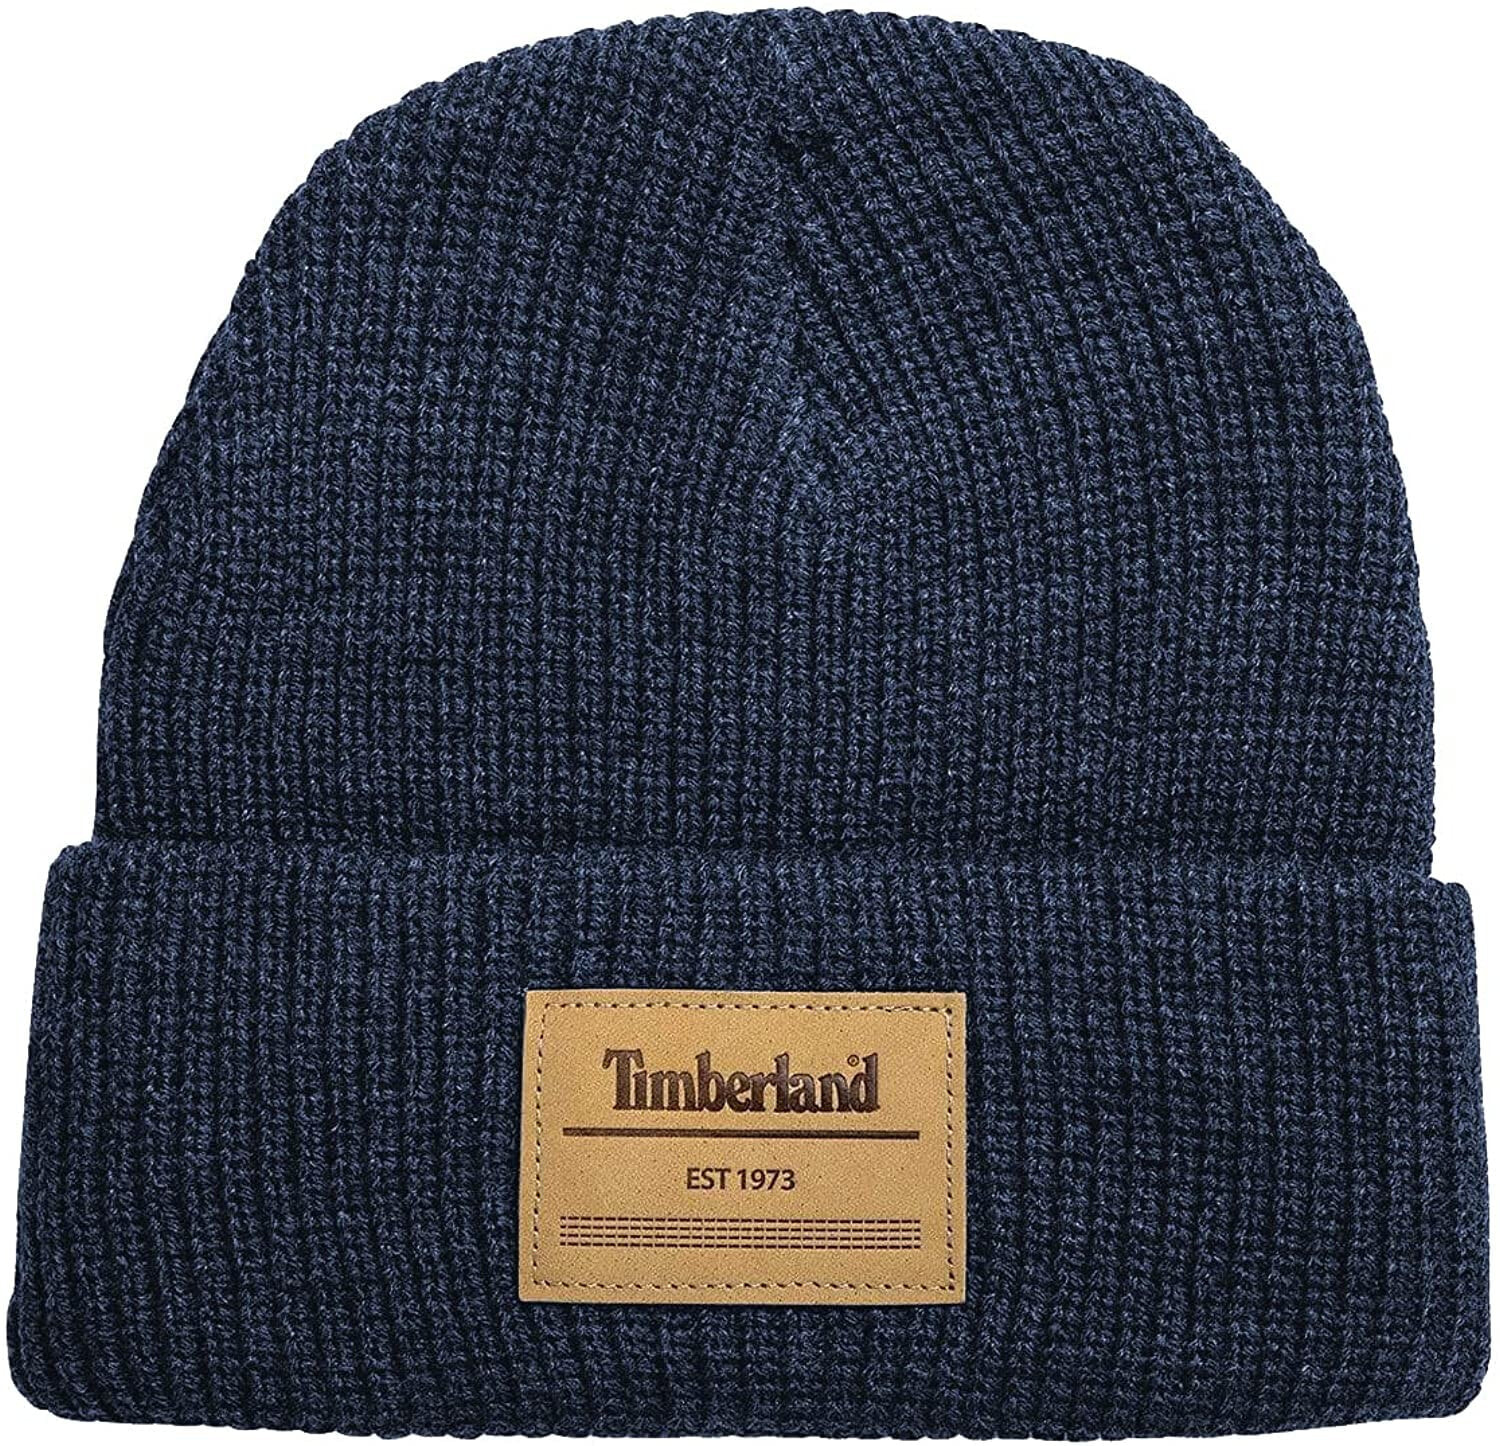 Мужская шапка синяя вязаная Timberland Mens Heat Retention Watch Cap Knit Beanie with Leather Patch